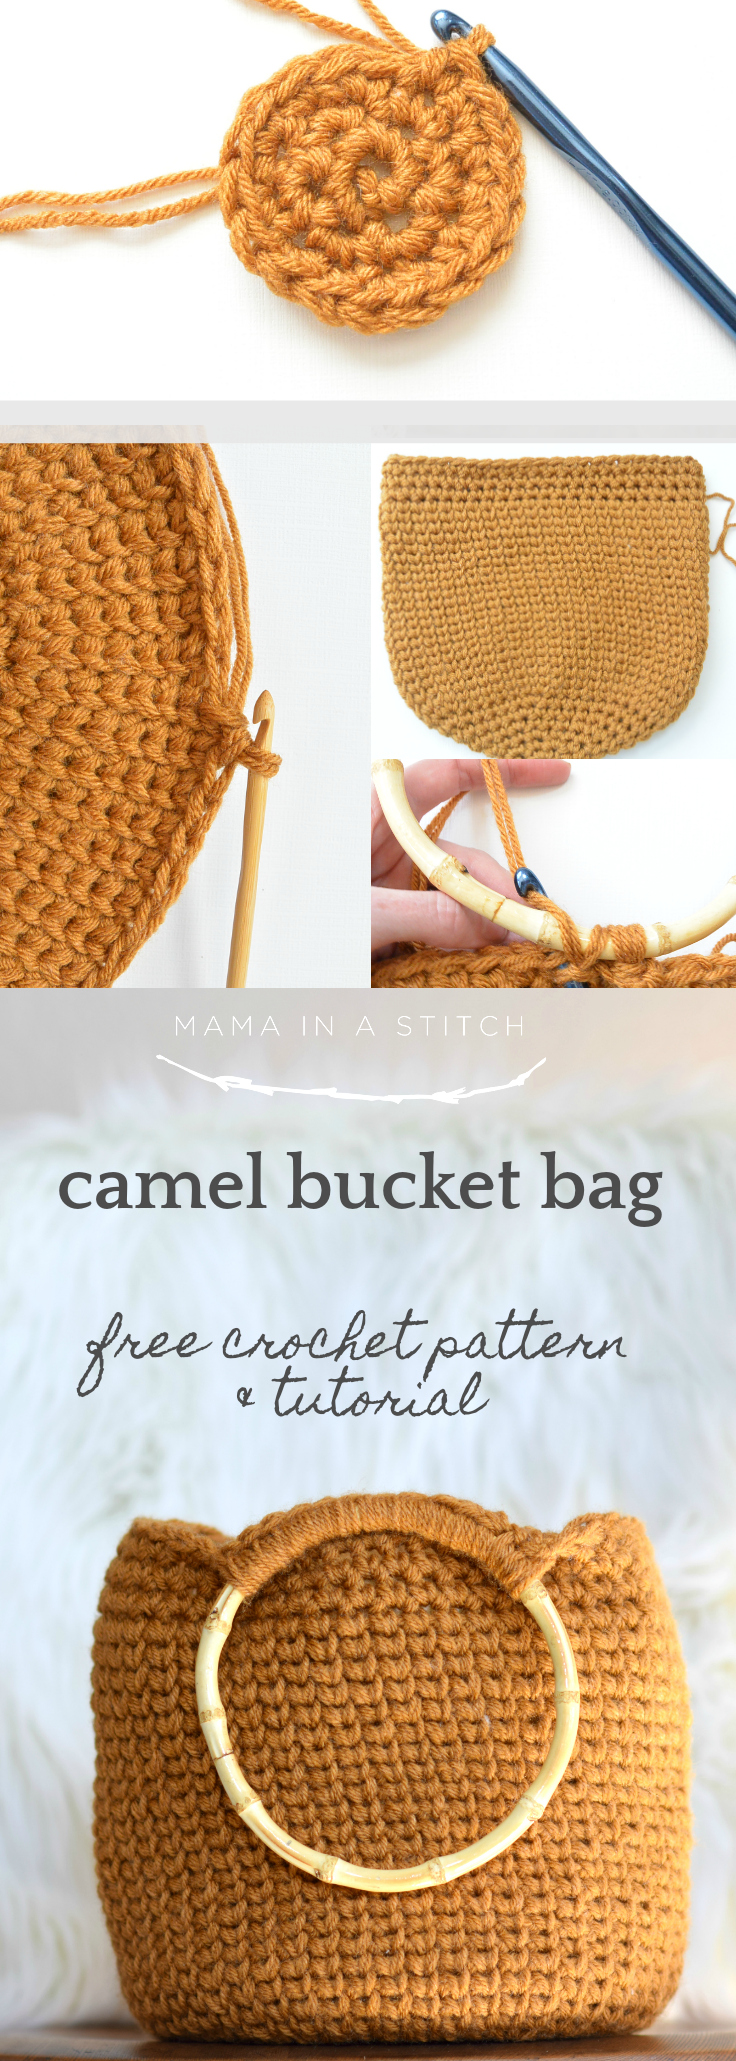 How to Make Crochet Bag Handles - CrochetNCrafts